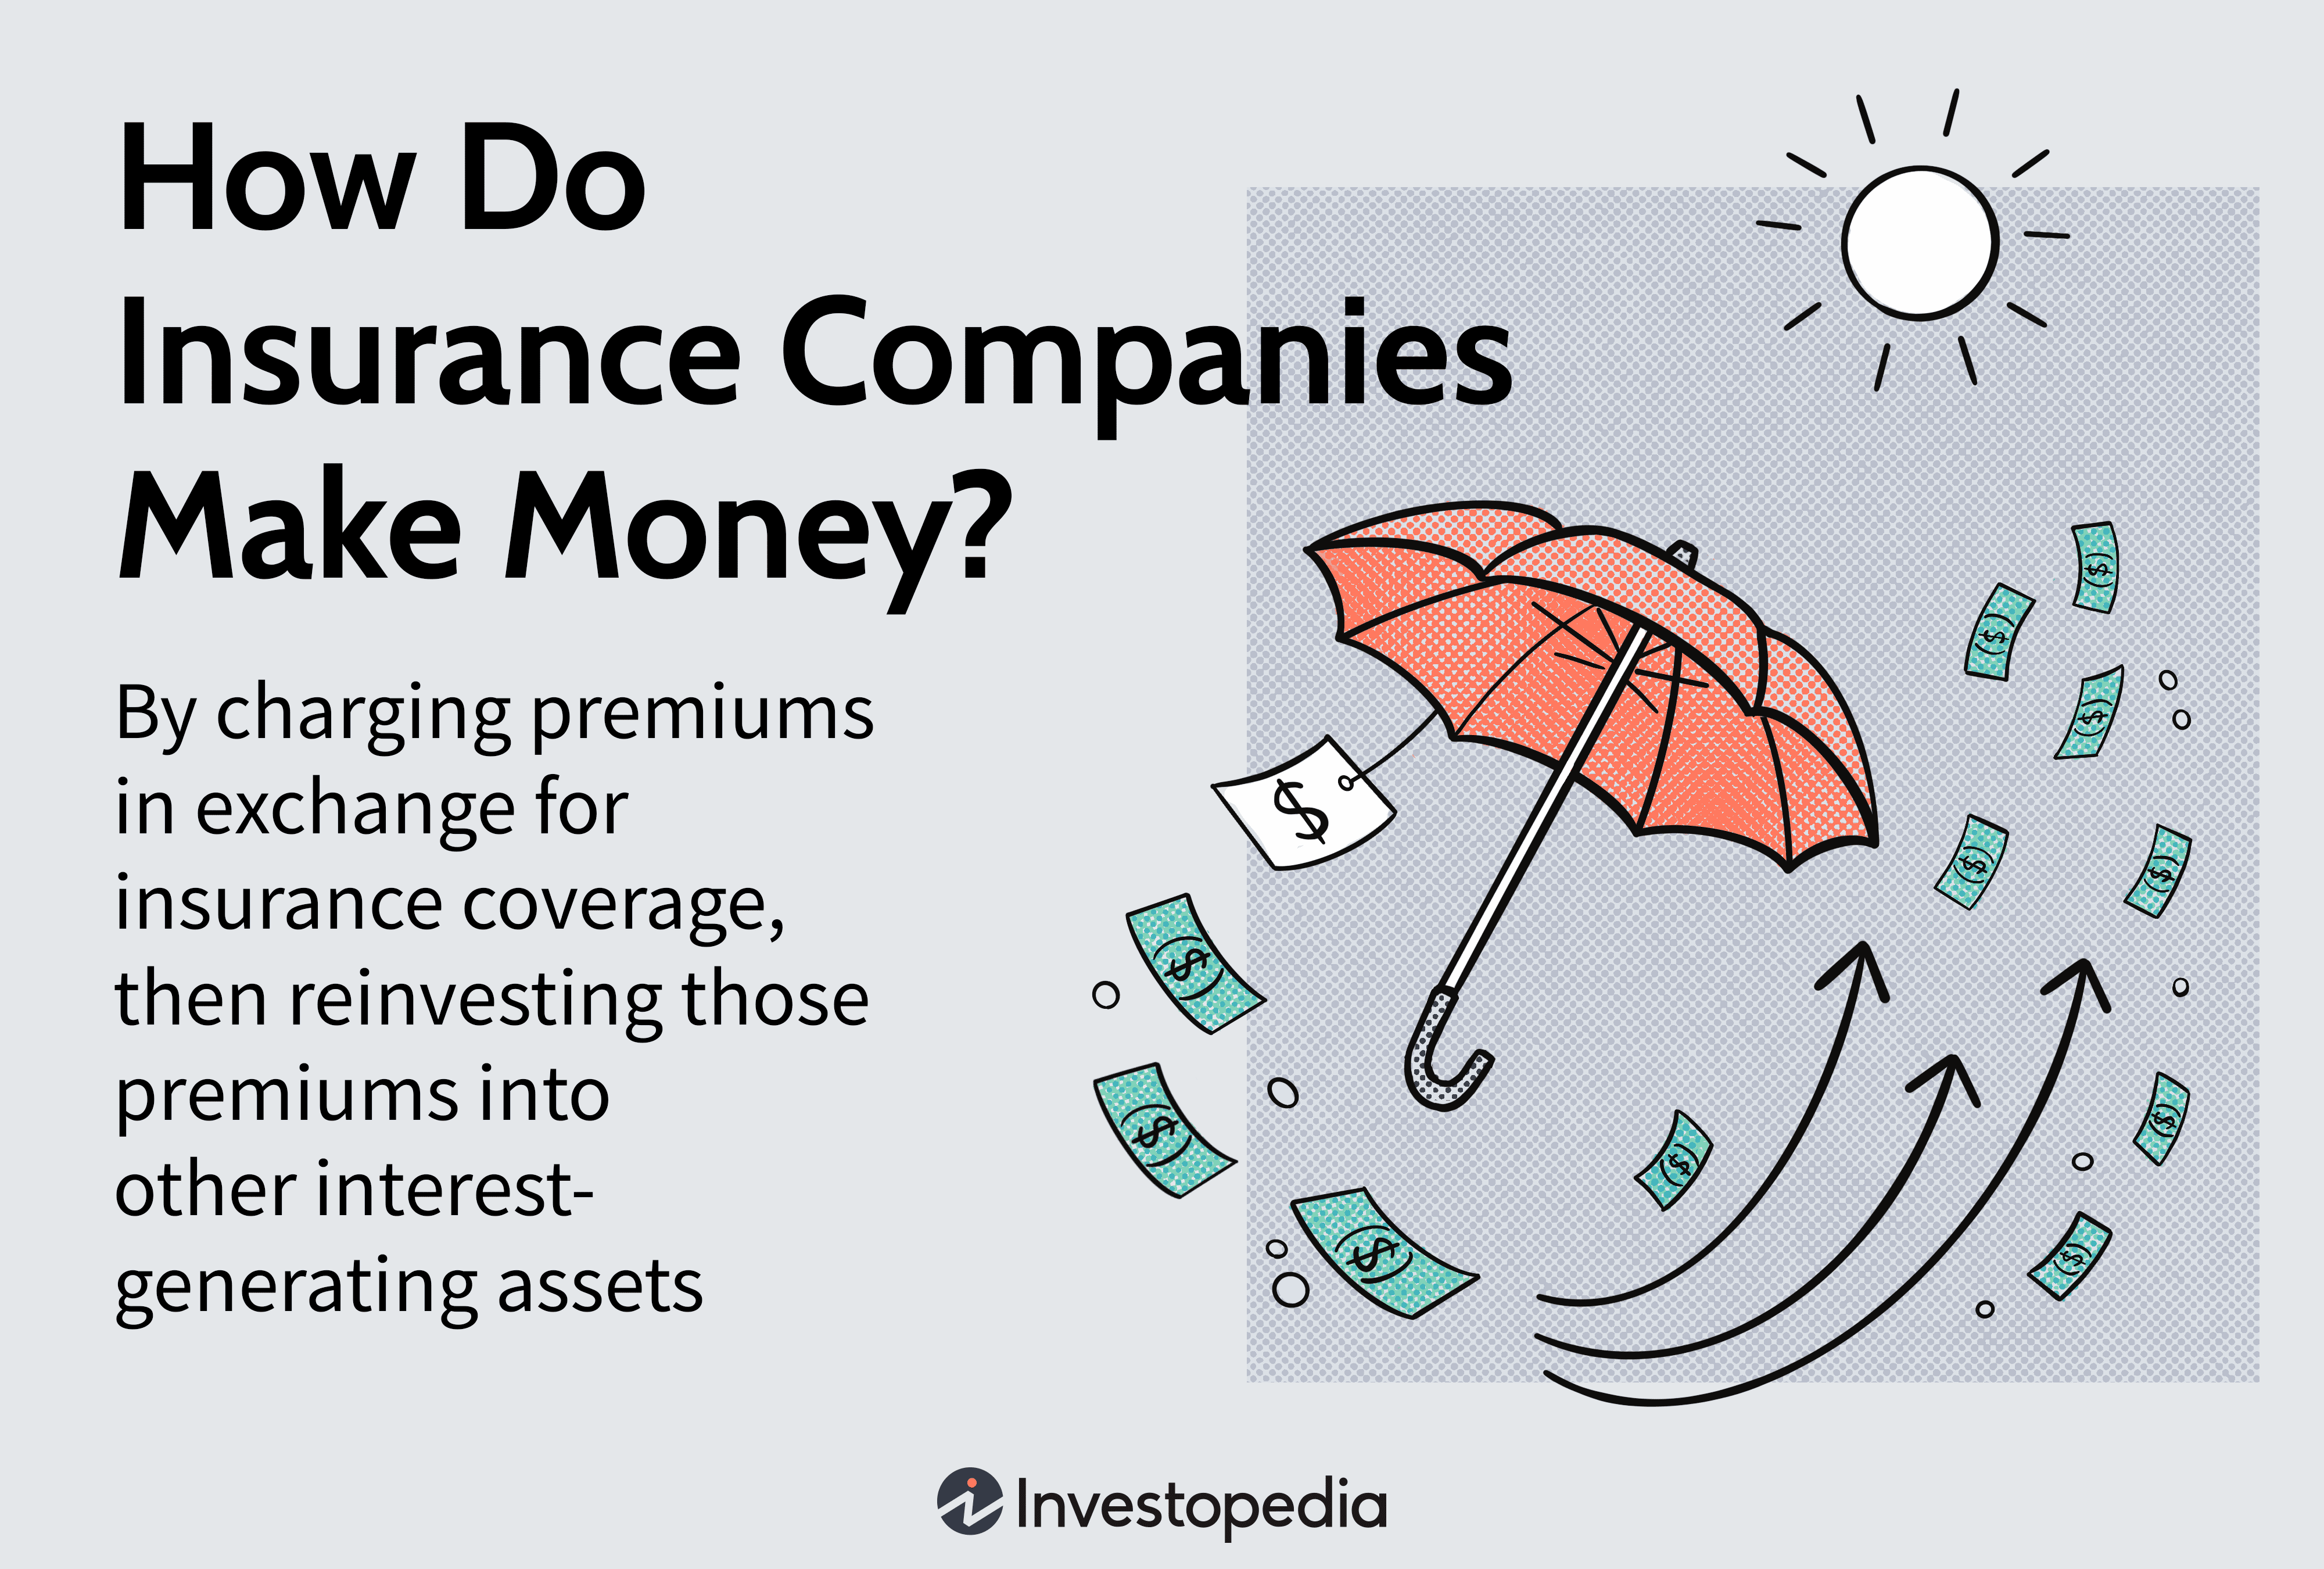 How Do Insurance Companies Make Money?